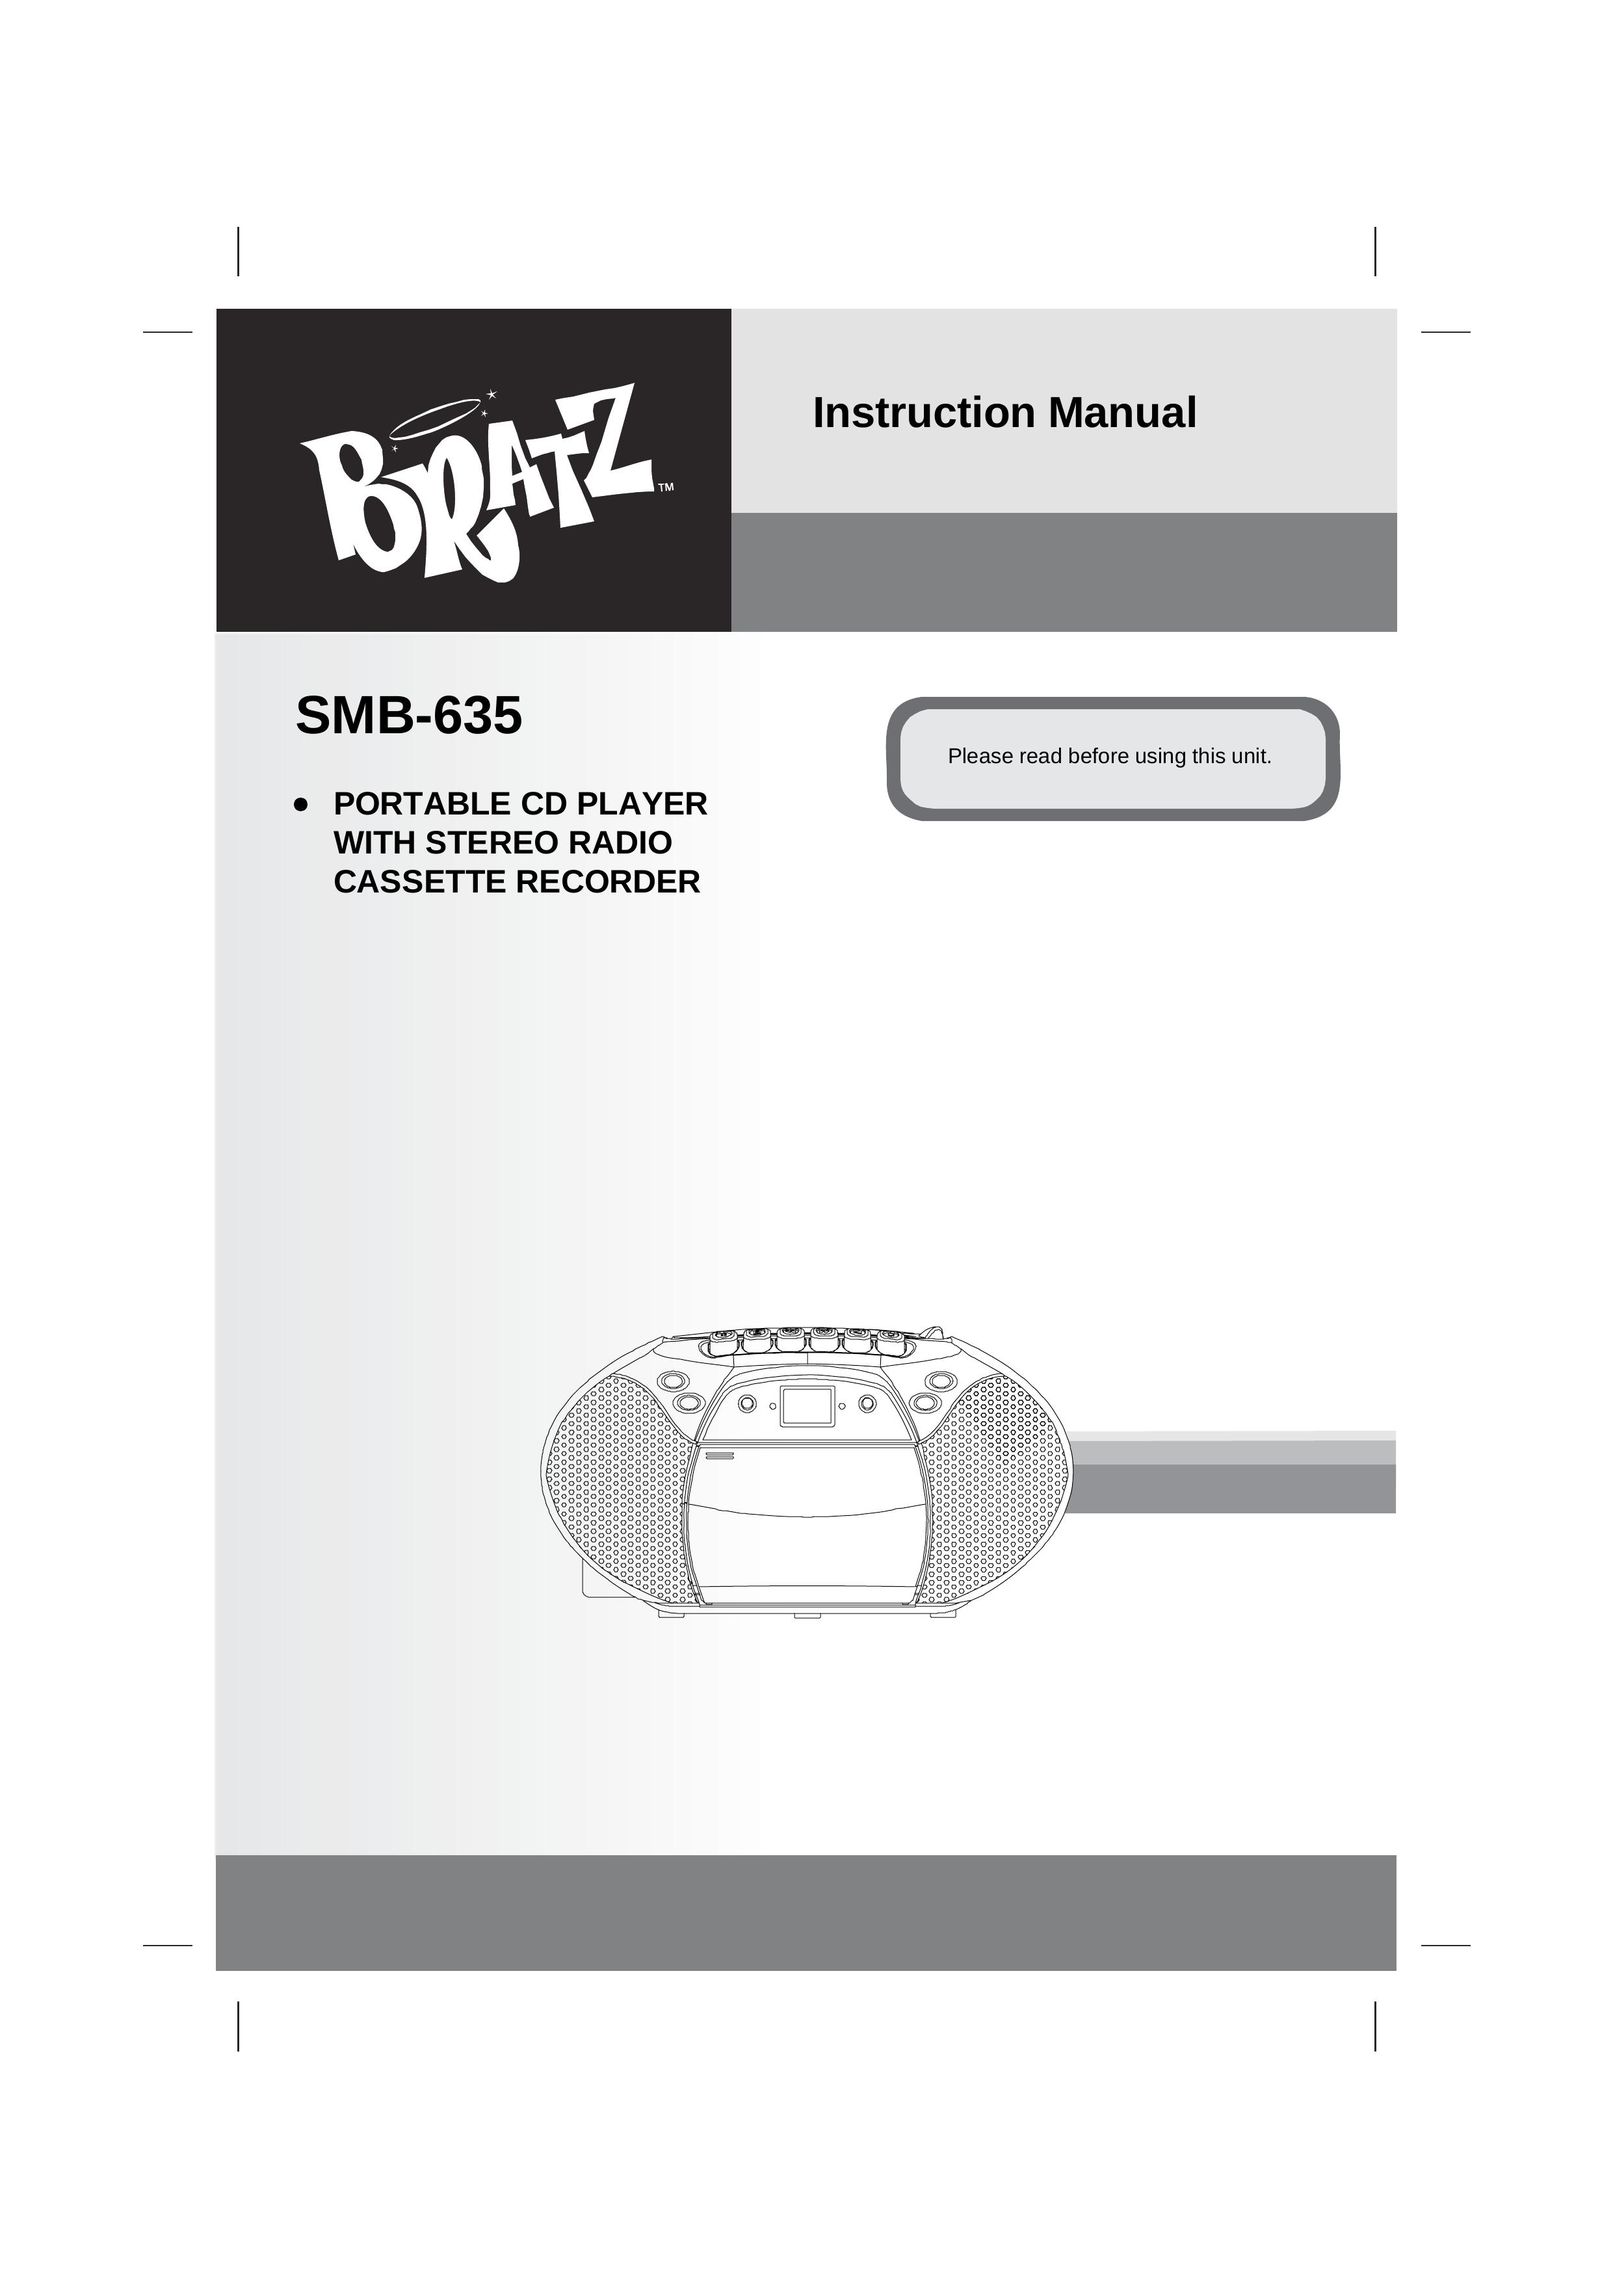 The Singing Machine SMB-635 CD Player User Manual